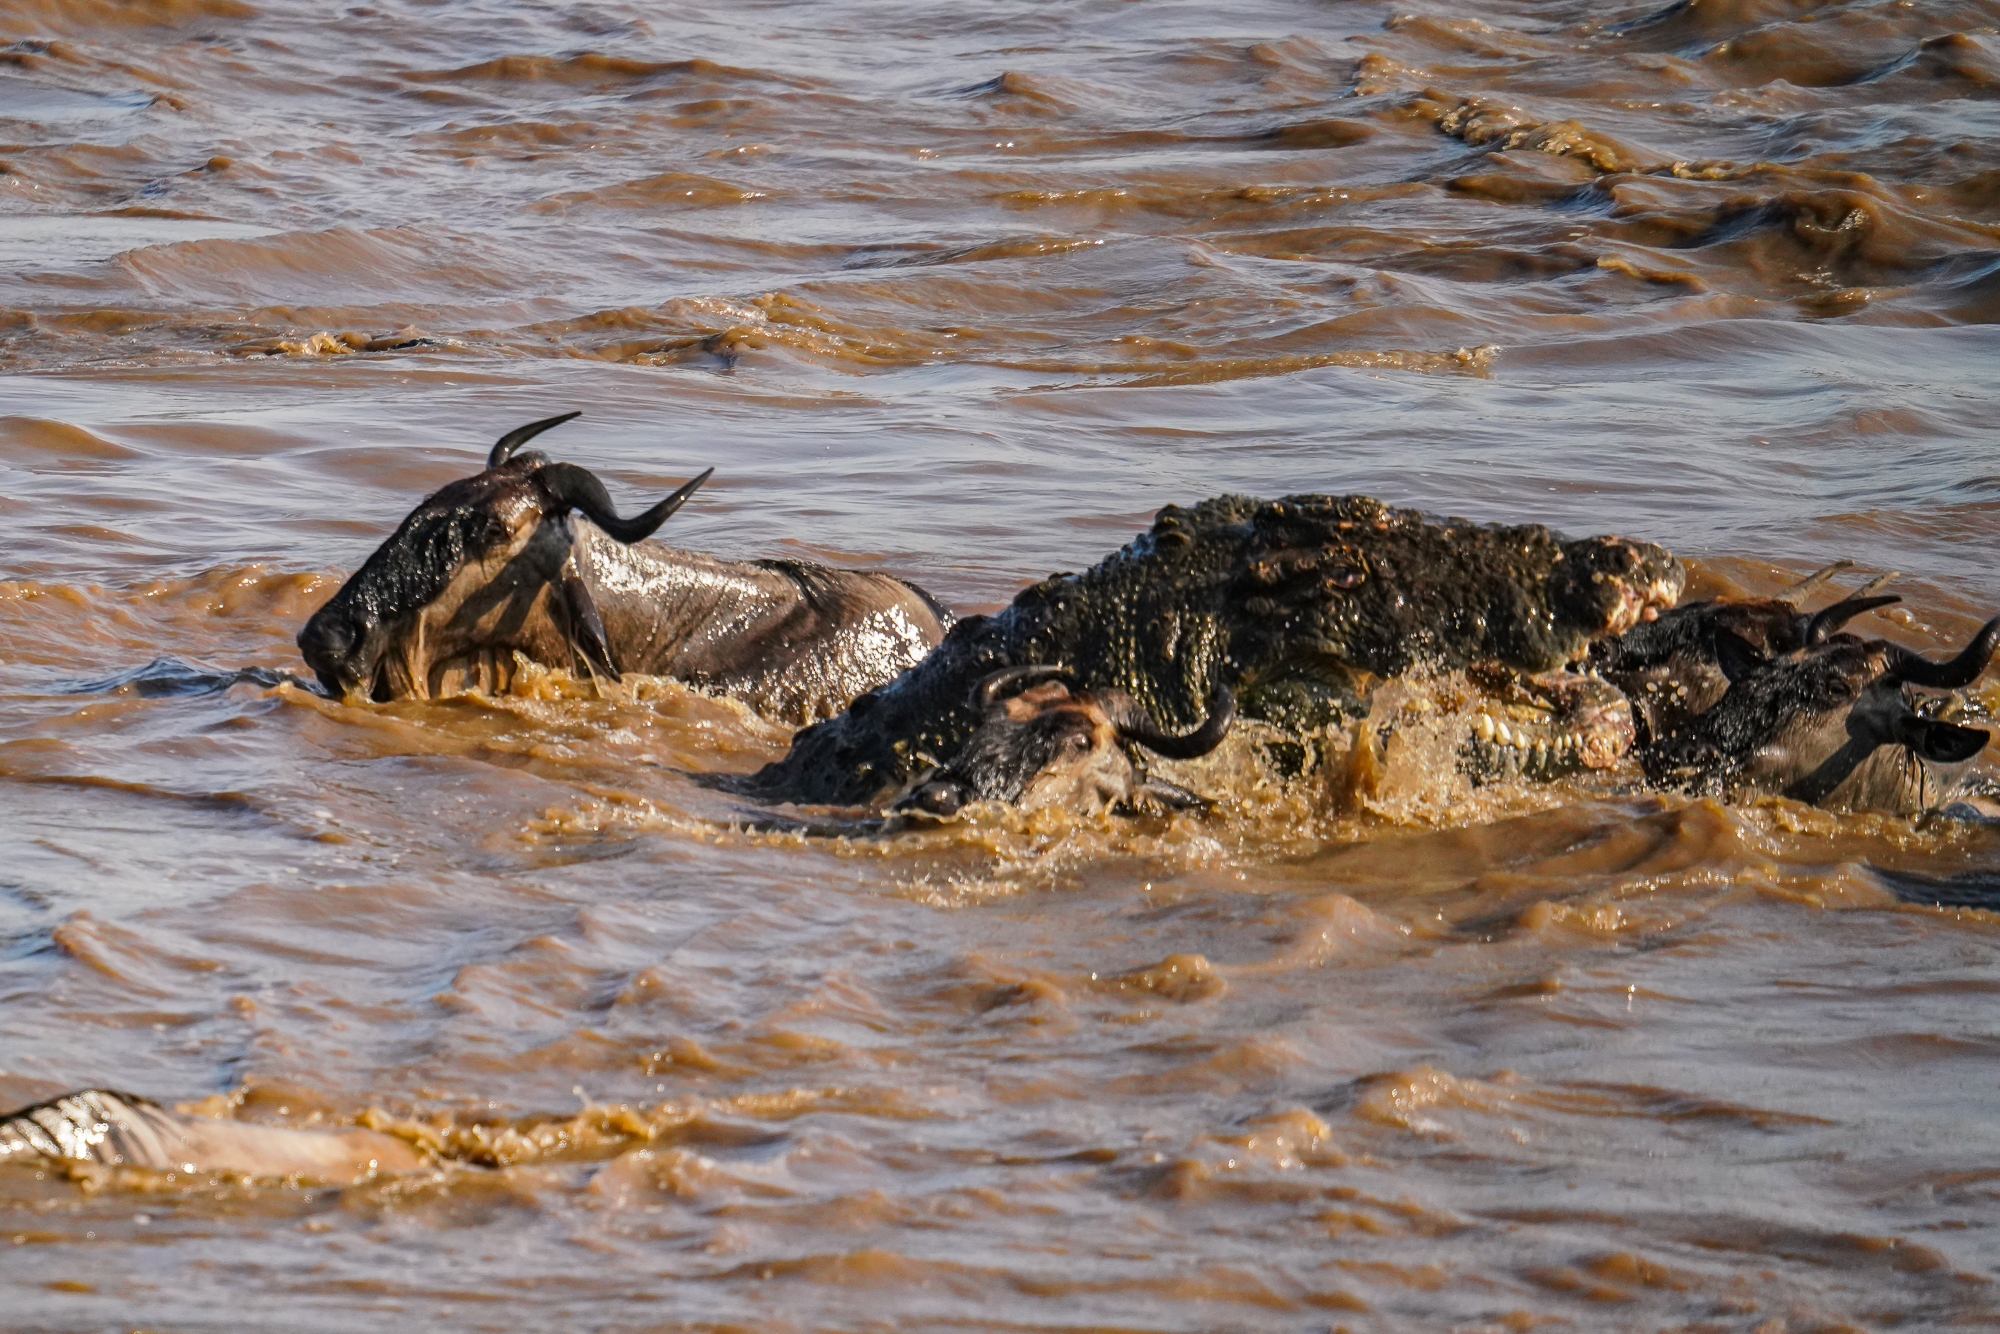 Crocodile kill on the Mara River